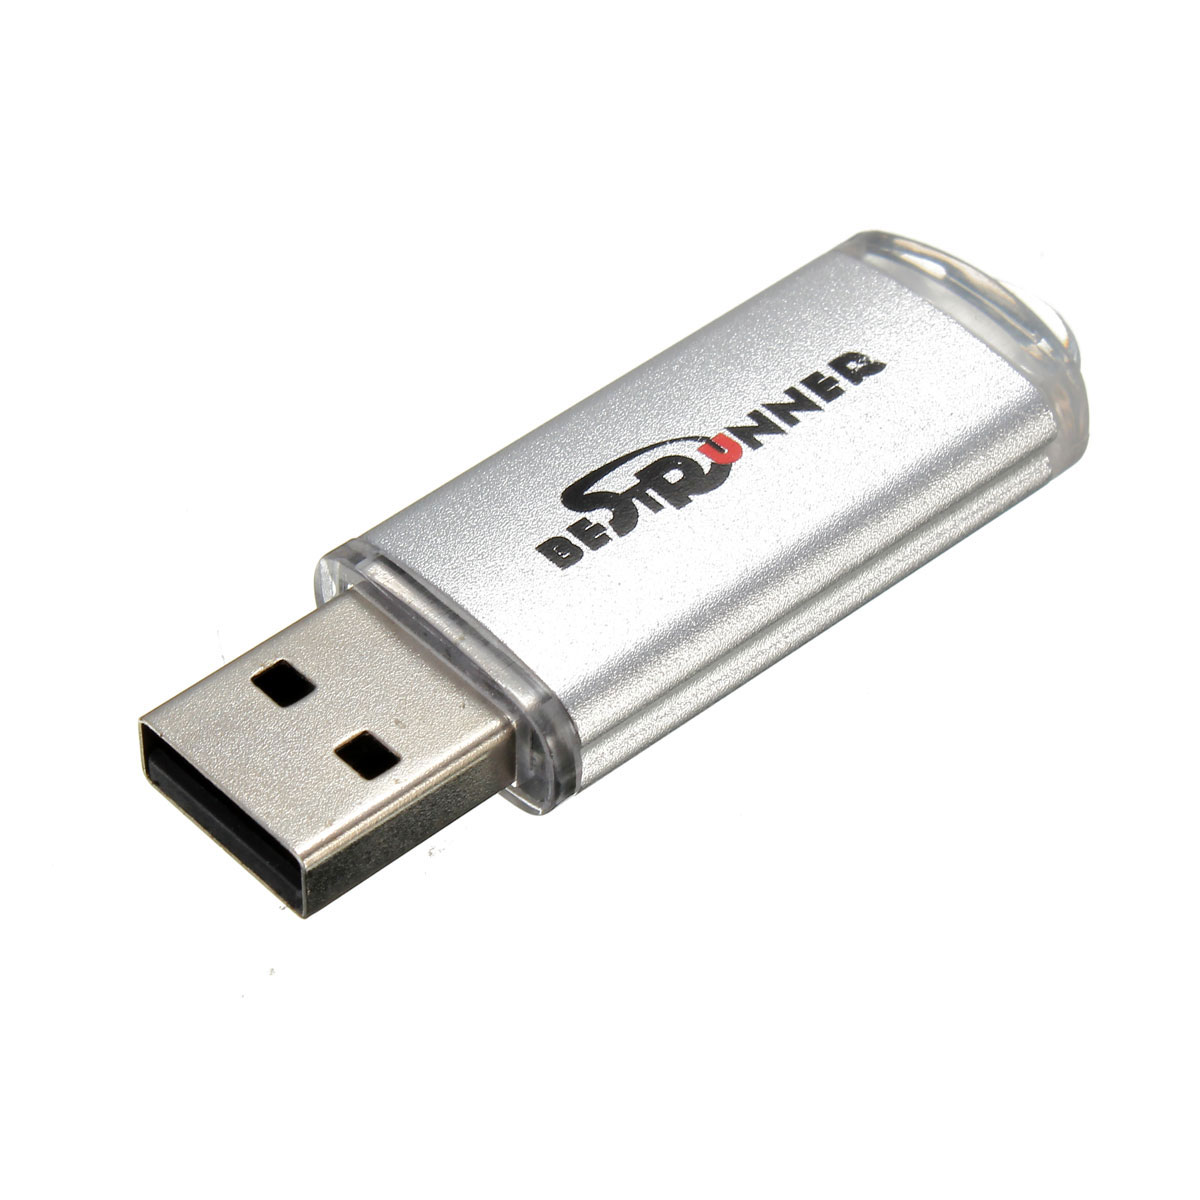 Флешка 1024. Флешка юсб 2.0. Флешка 32 ГБ юсб. Флешка twinmos USB2.0 mobile Disk a1 2gb. Флеш-память 16gb USB.